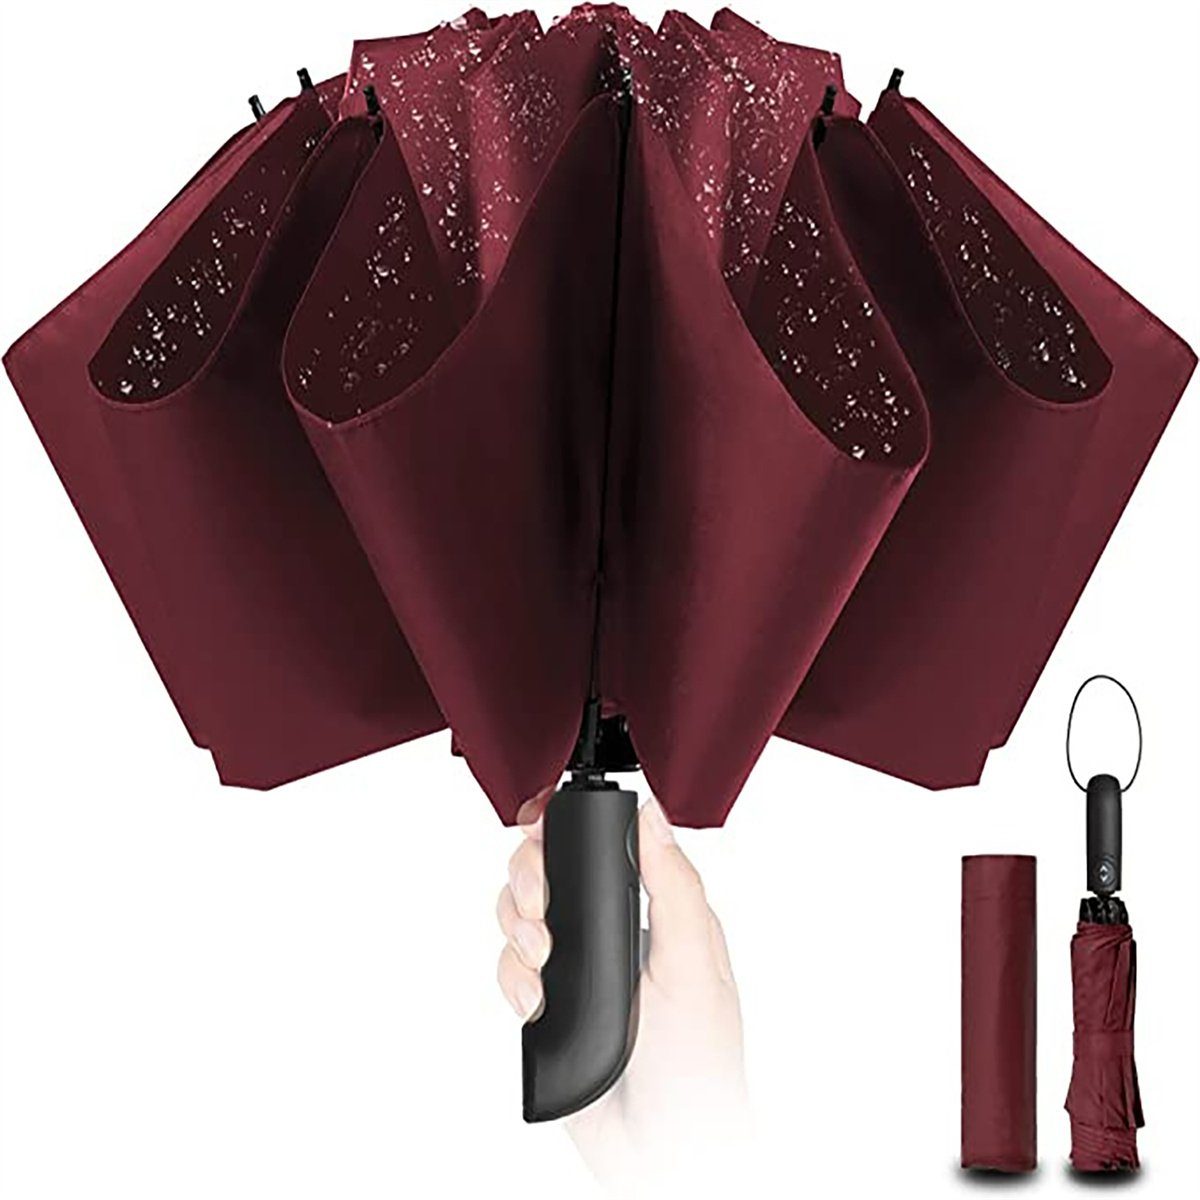 yozhiqu Taschenregenschirm Kompakter faltbarer Regenschirm – winddichter schwarzer automatischer, 210T Teflon-beschichteter Baldachin, 105 cm groß, 10 Rippen